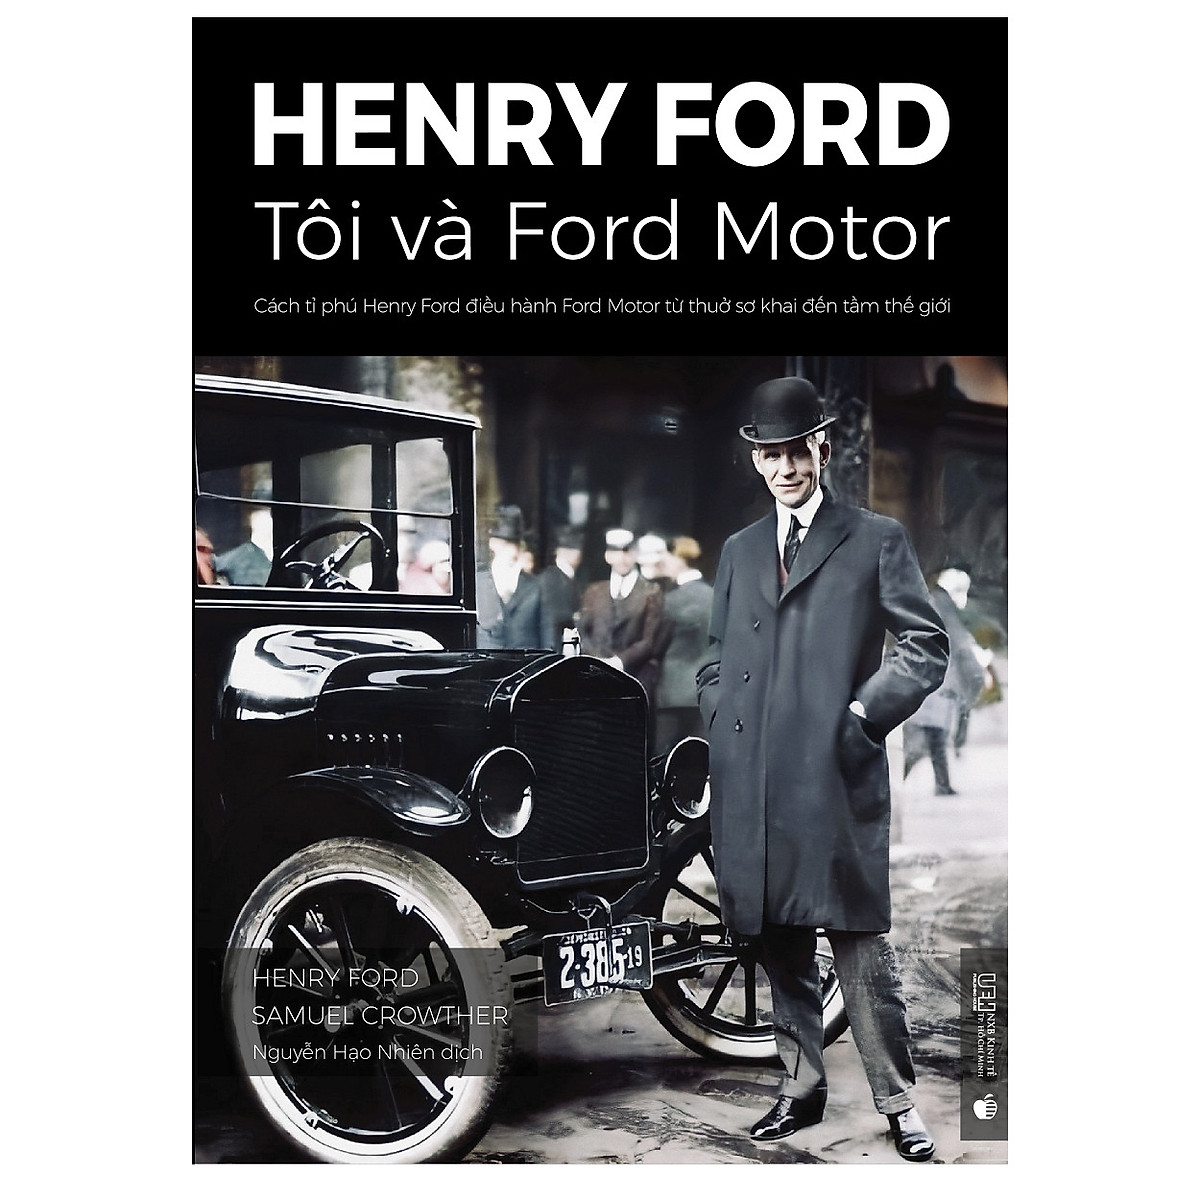 02-Henry Ford - Toi va Ford motor-min